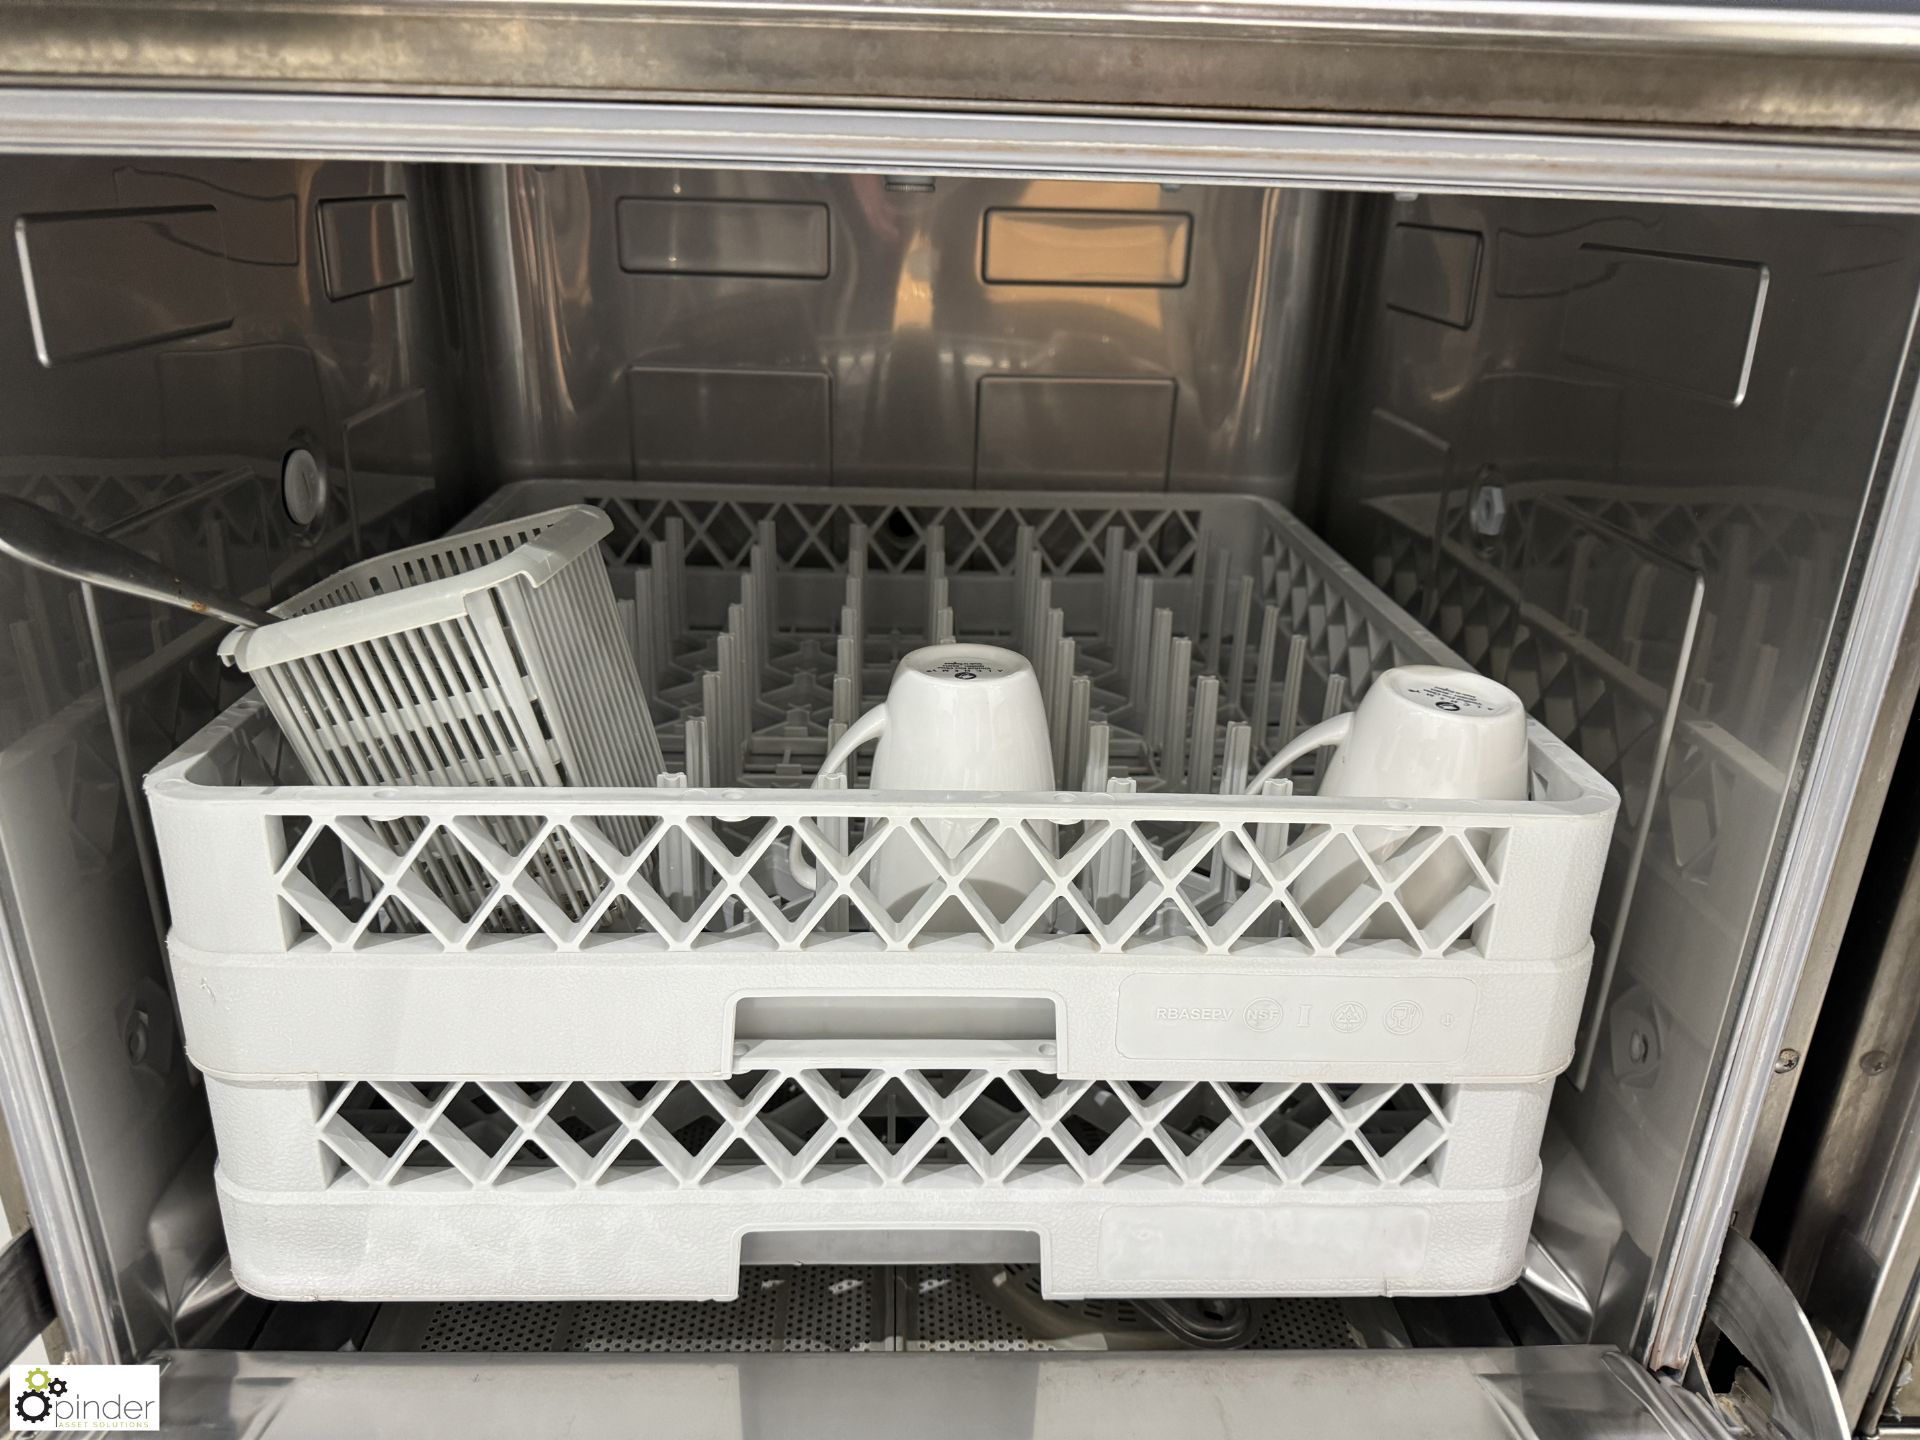 Maidaid D515 stainless steel under counter single tray Dishwasher, 240volts (location in - Bild 2 aus 3